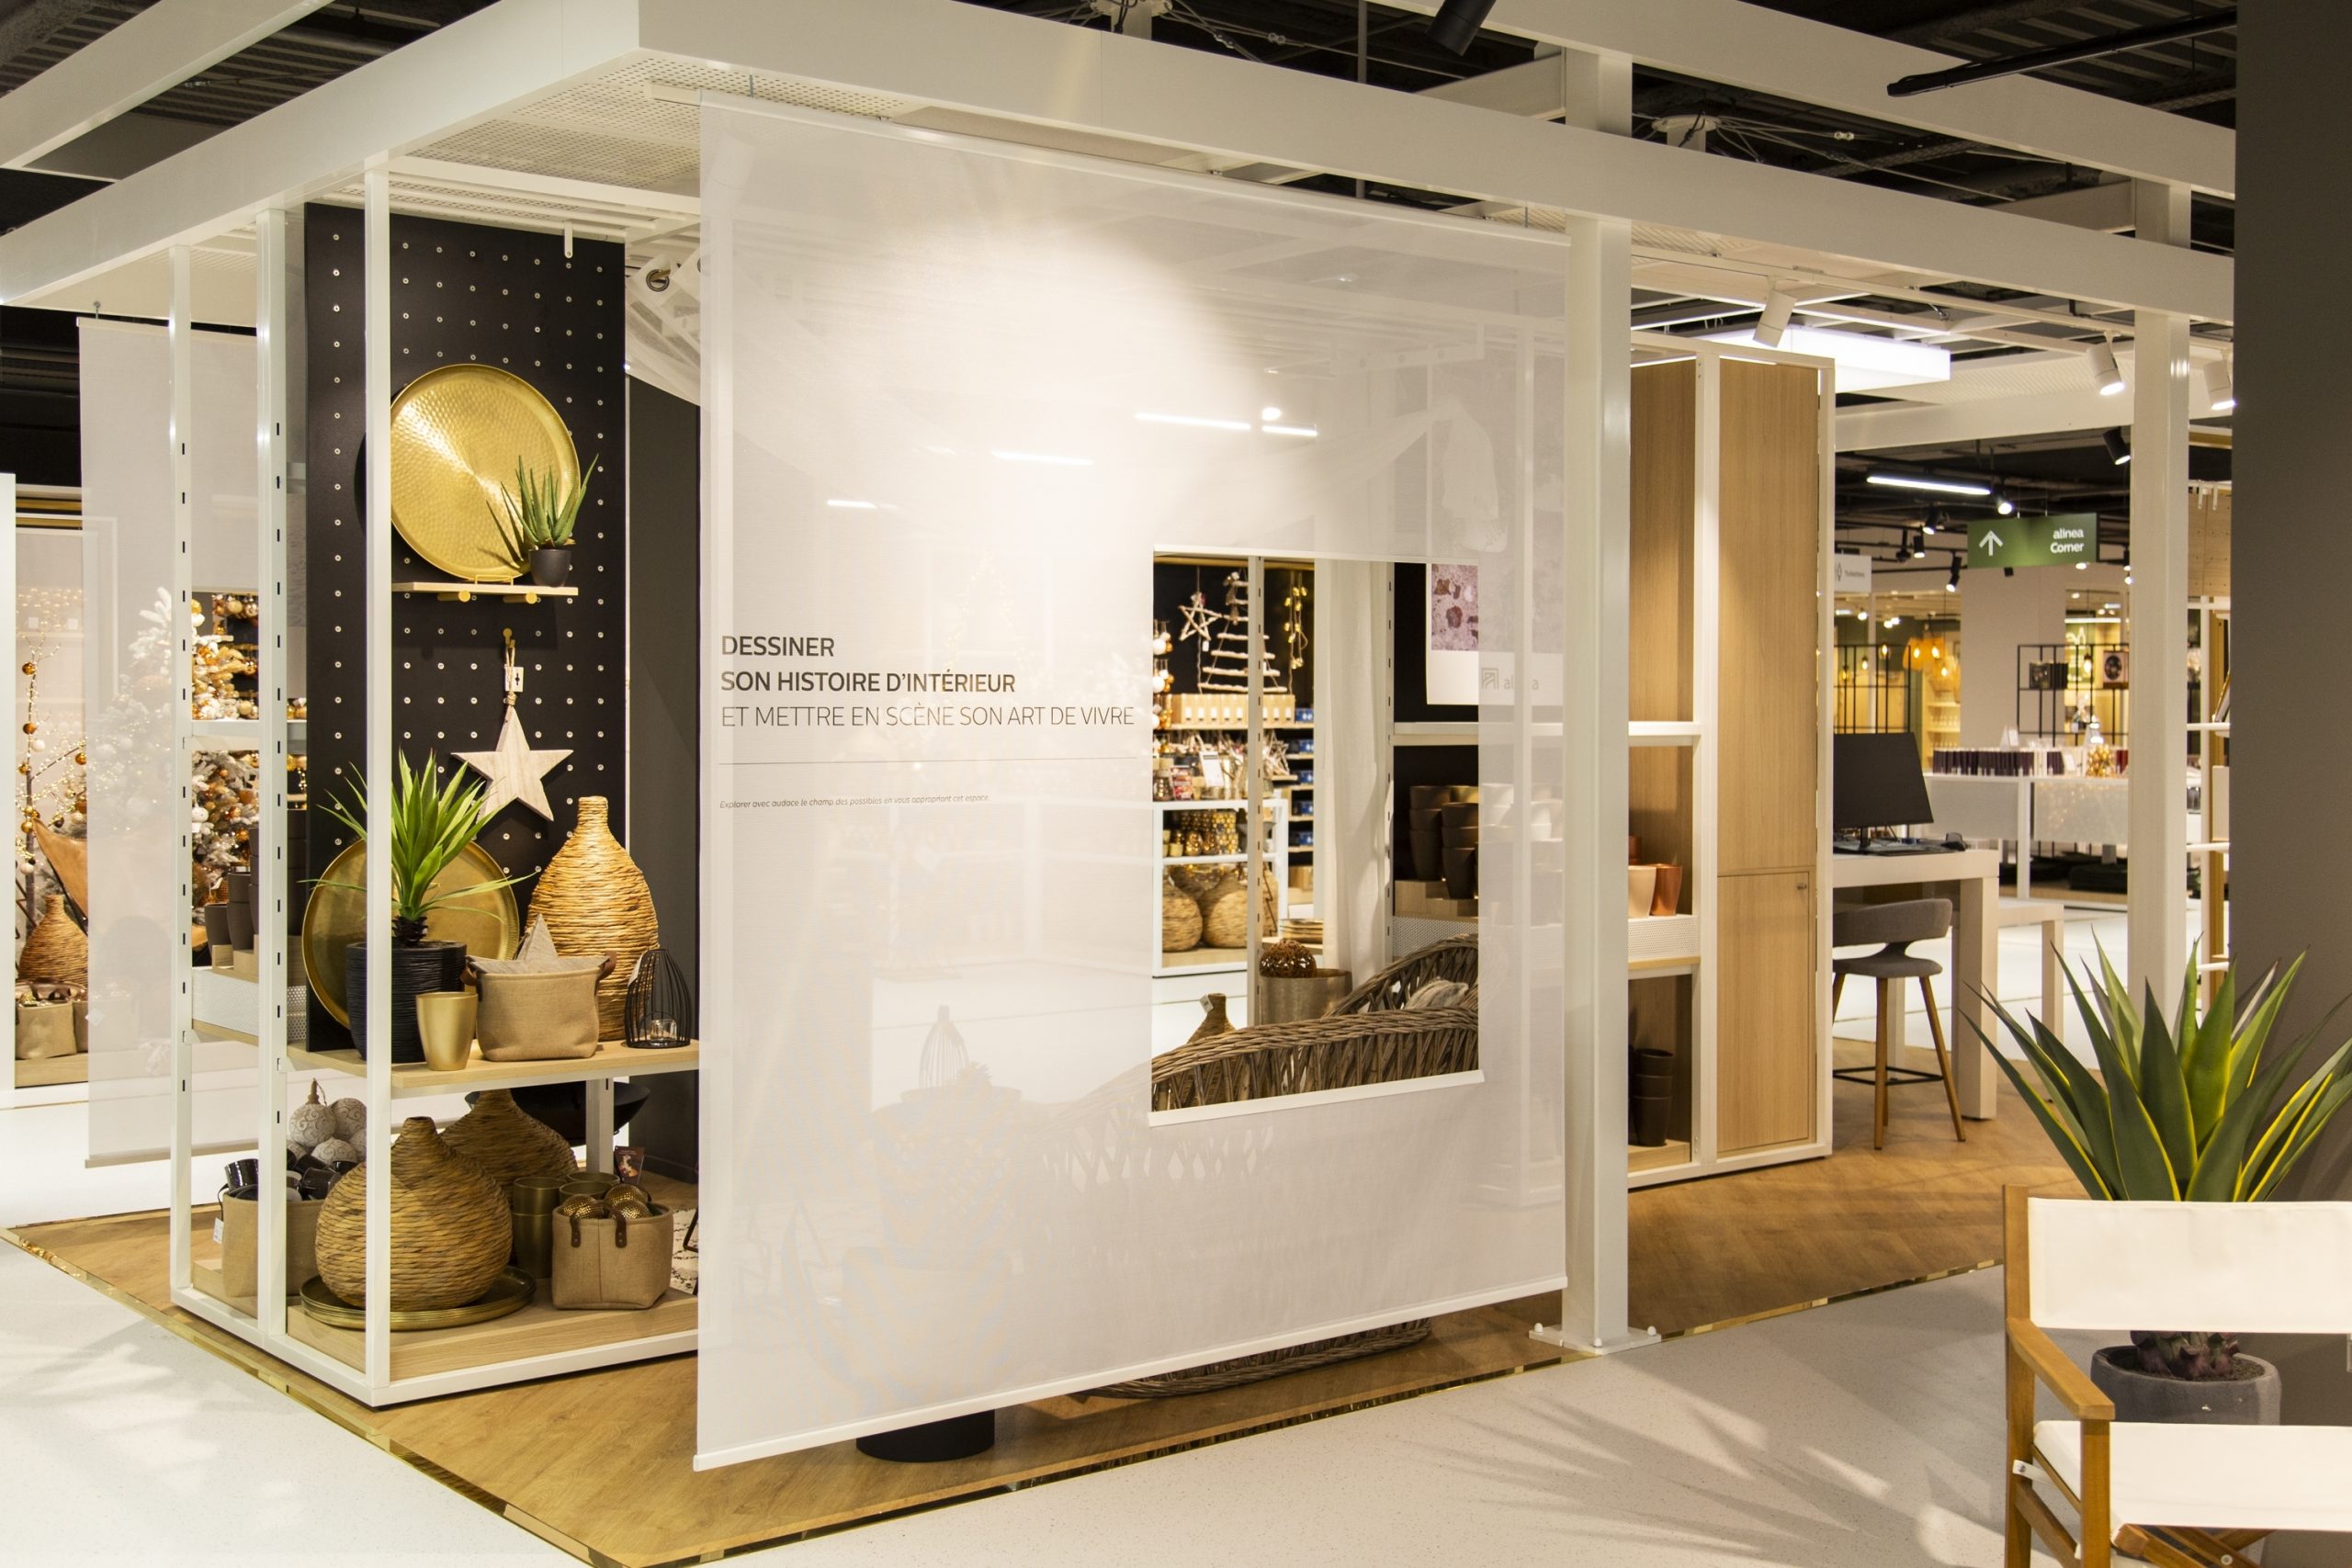 Alinea, An Innovative Concept Store - Cba - Agence De Design concernant Alinea Merignac